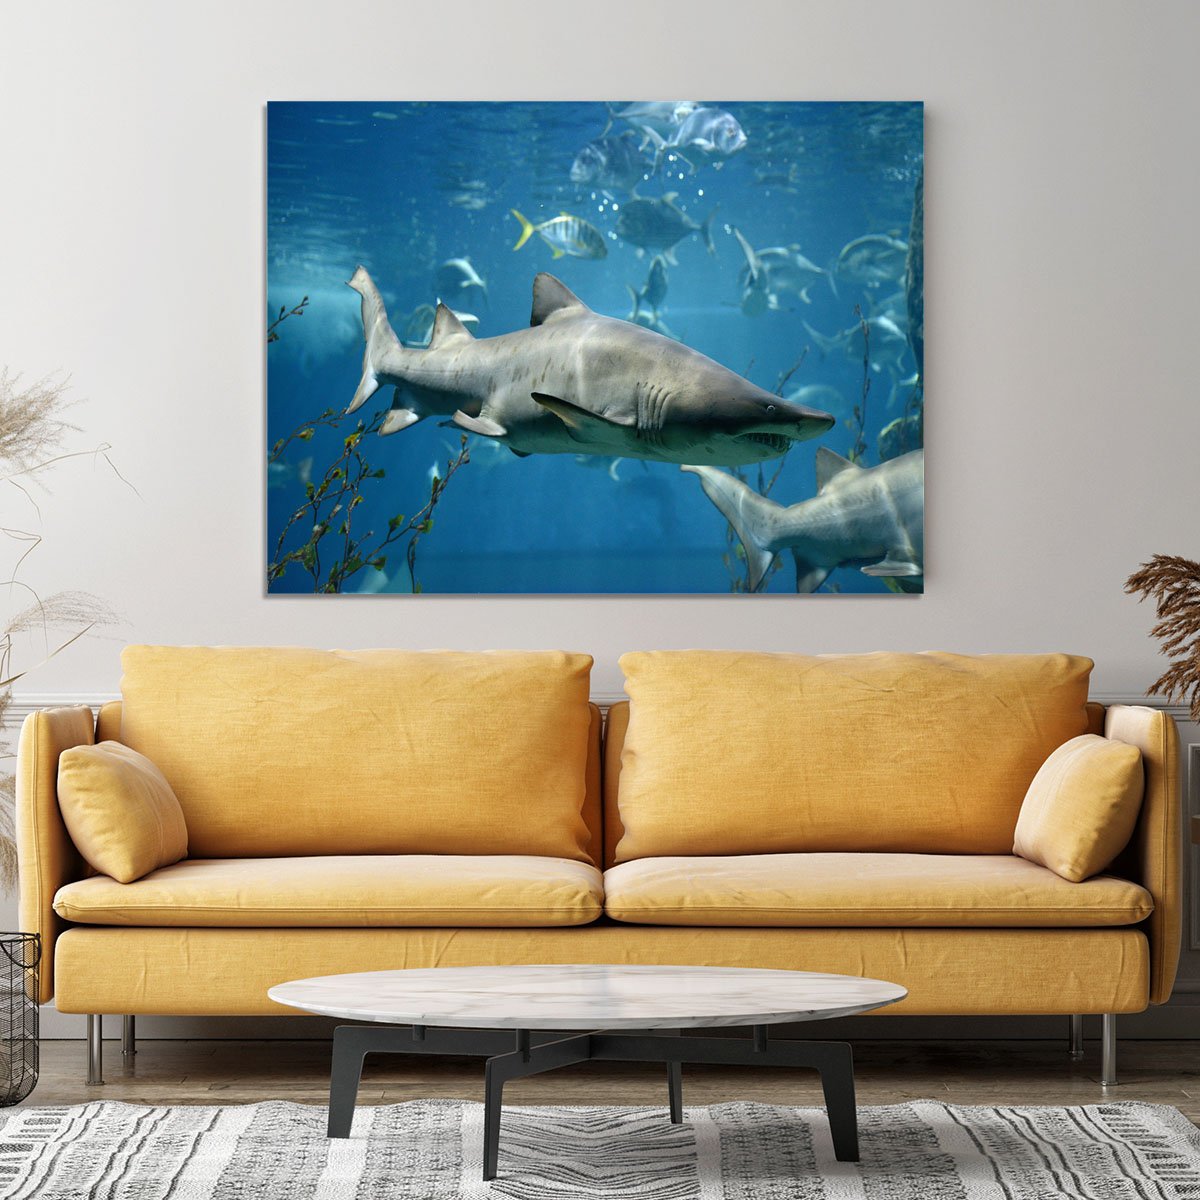 Marine fish underwater Canvas Print or Poster